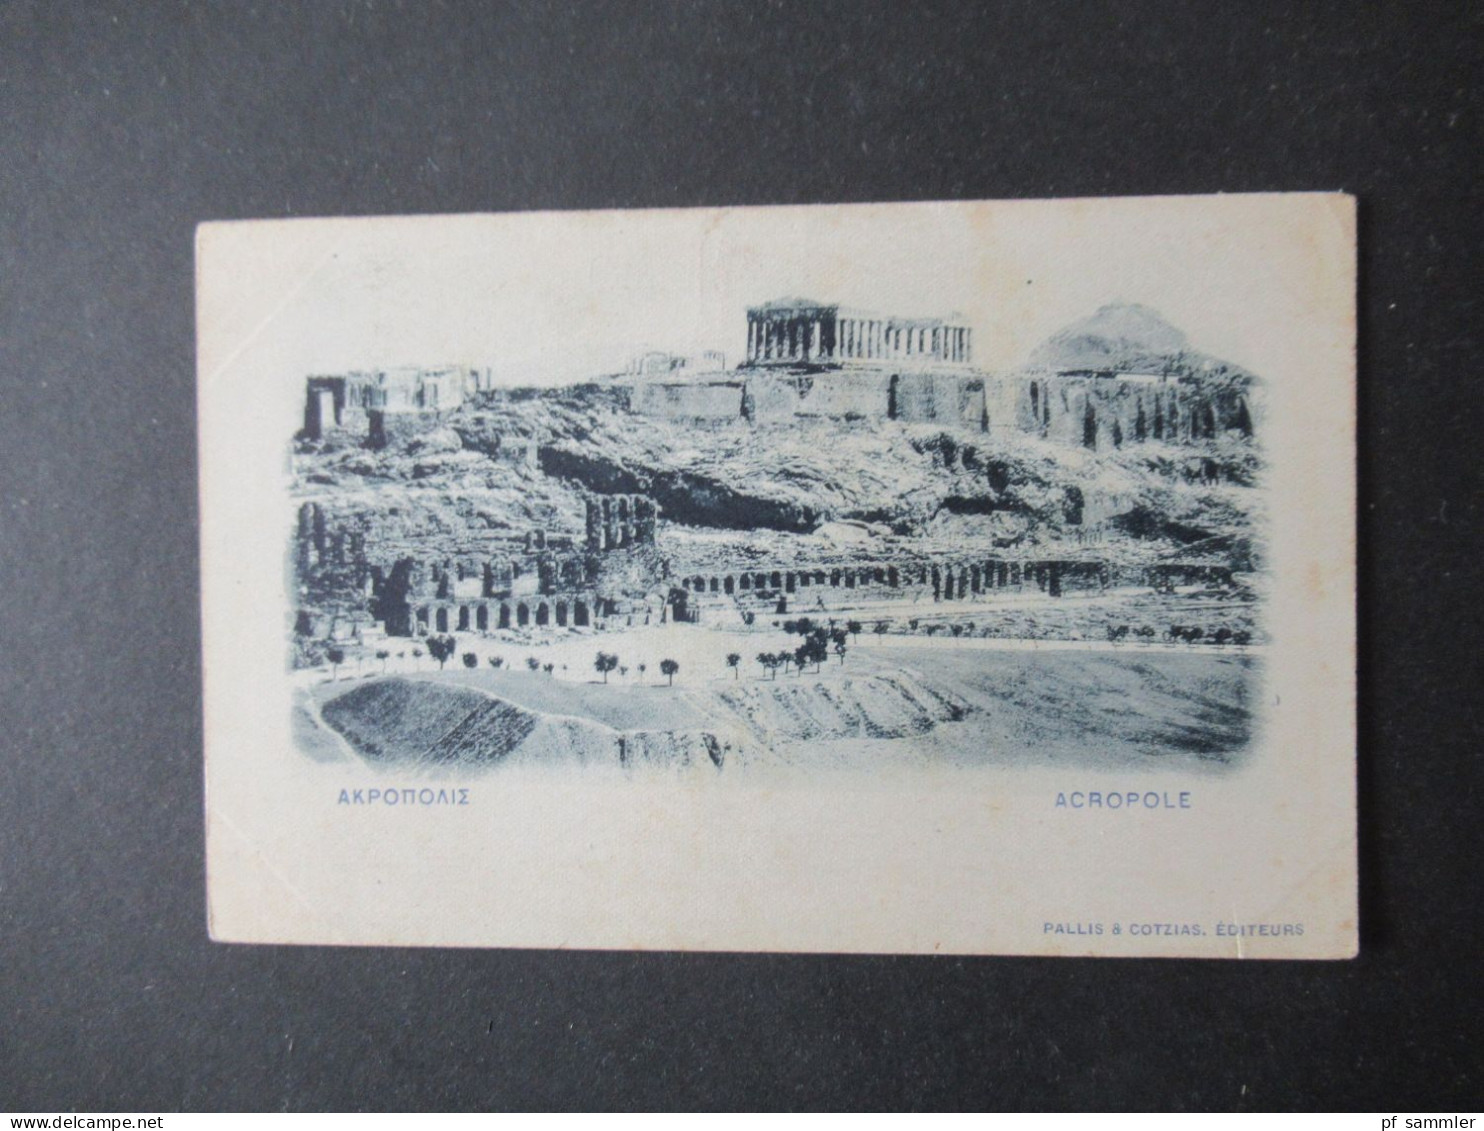 Griechenland Um 1900 Ganzsache Bild PK Carte Postale Reponse / Acropole Pallis & Cotzias Editeurs Ungebraucht! - Postwaardestukken